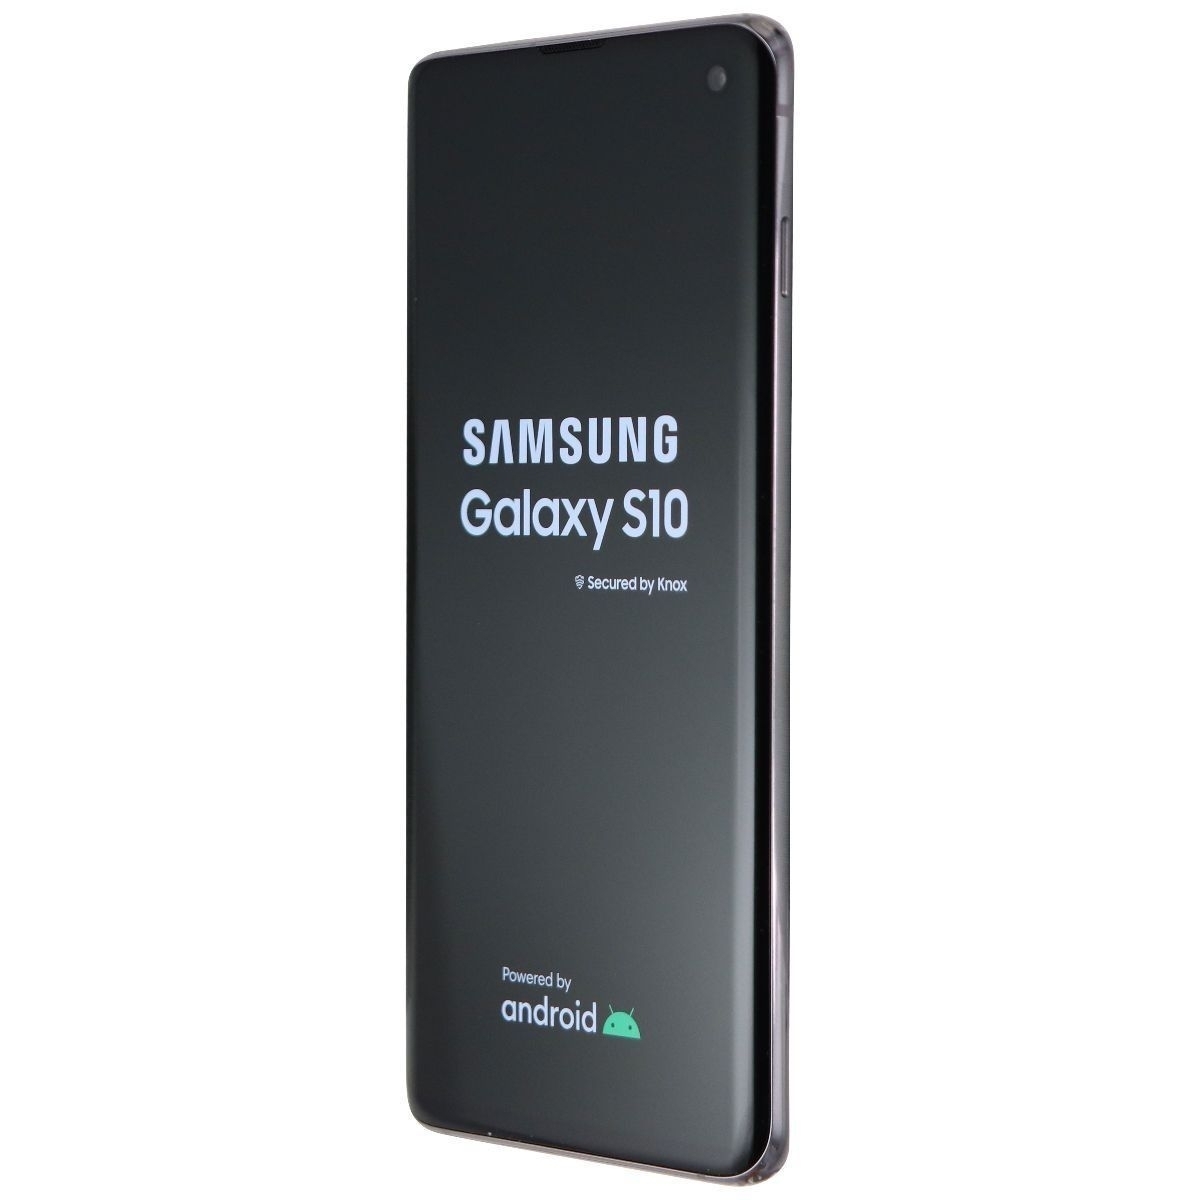 Samsung Galaxy S10 (6.1-in) Smartphone (SM-G973U) Unlocked - 128GB/Prism Black